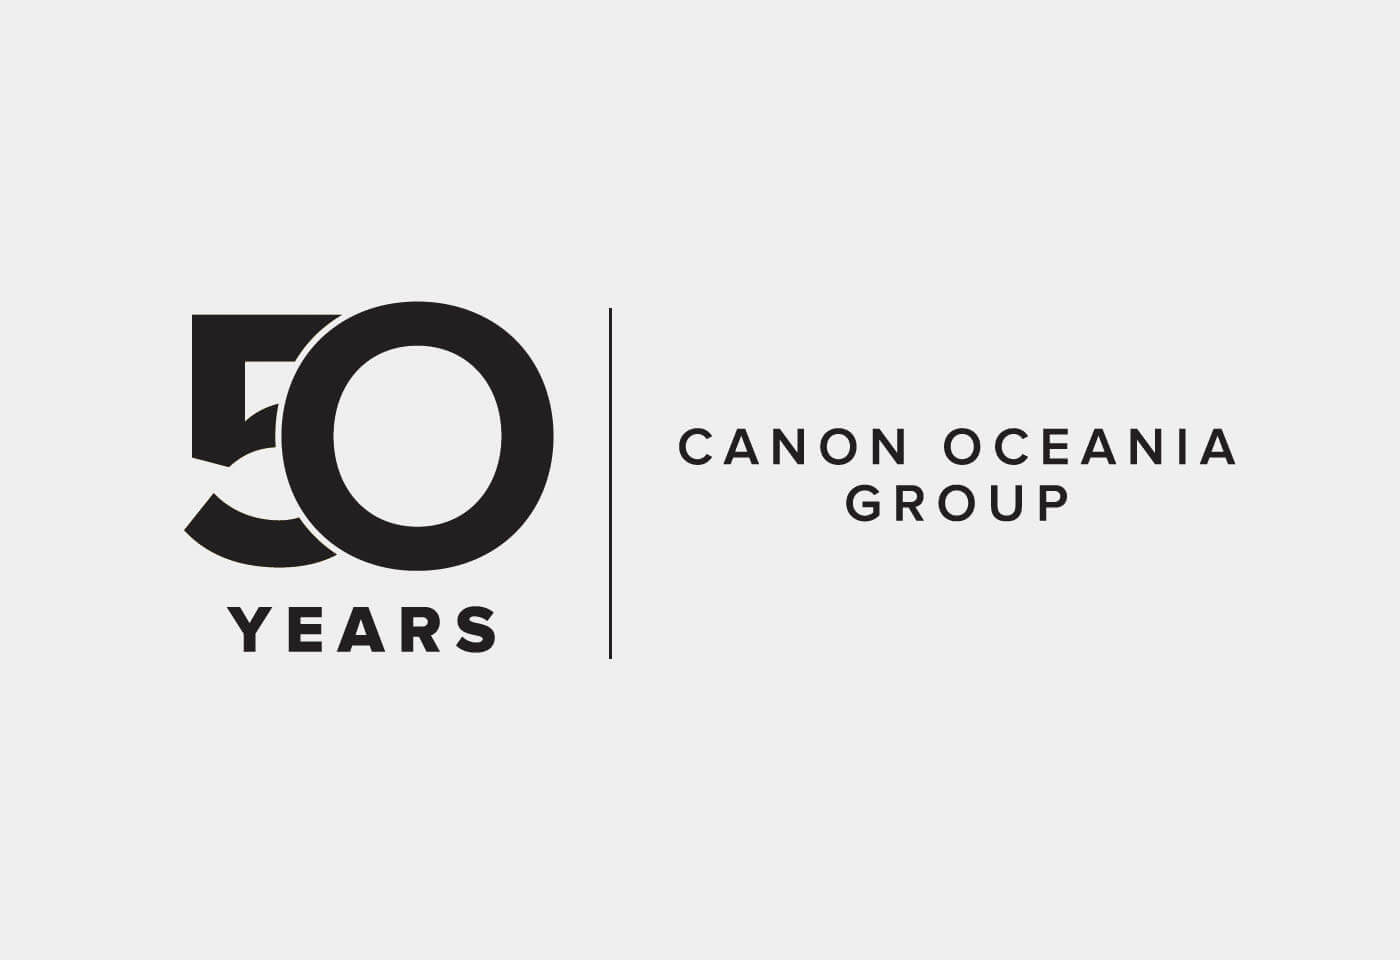 Canon Oceania Group 50 years